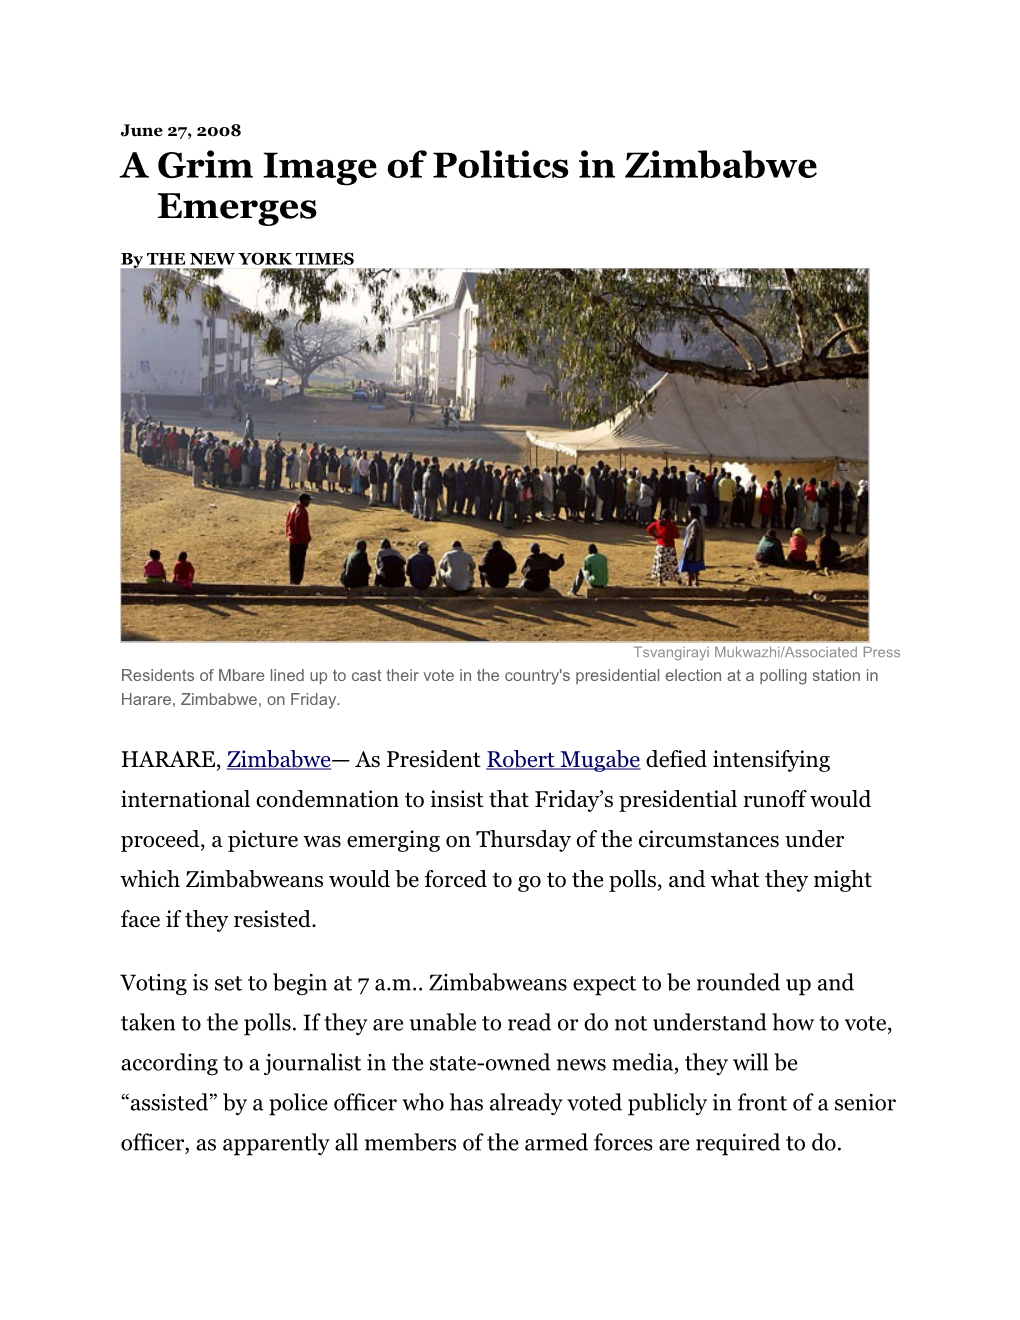 A Grim Image of Politics in Zimbabwe Emerges